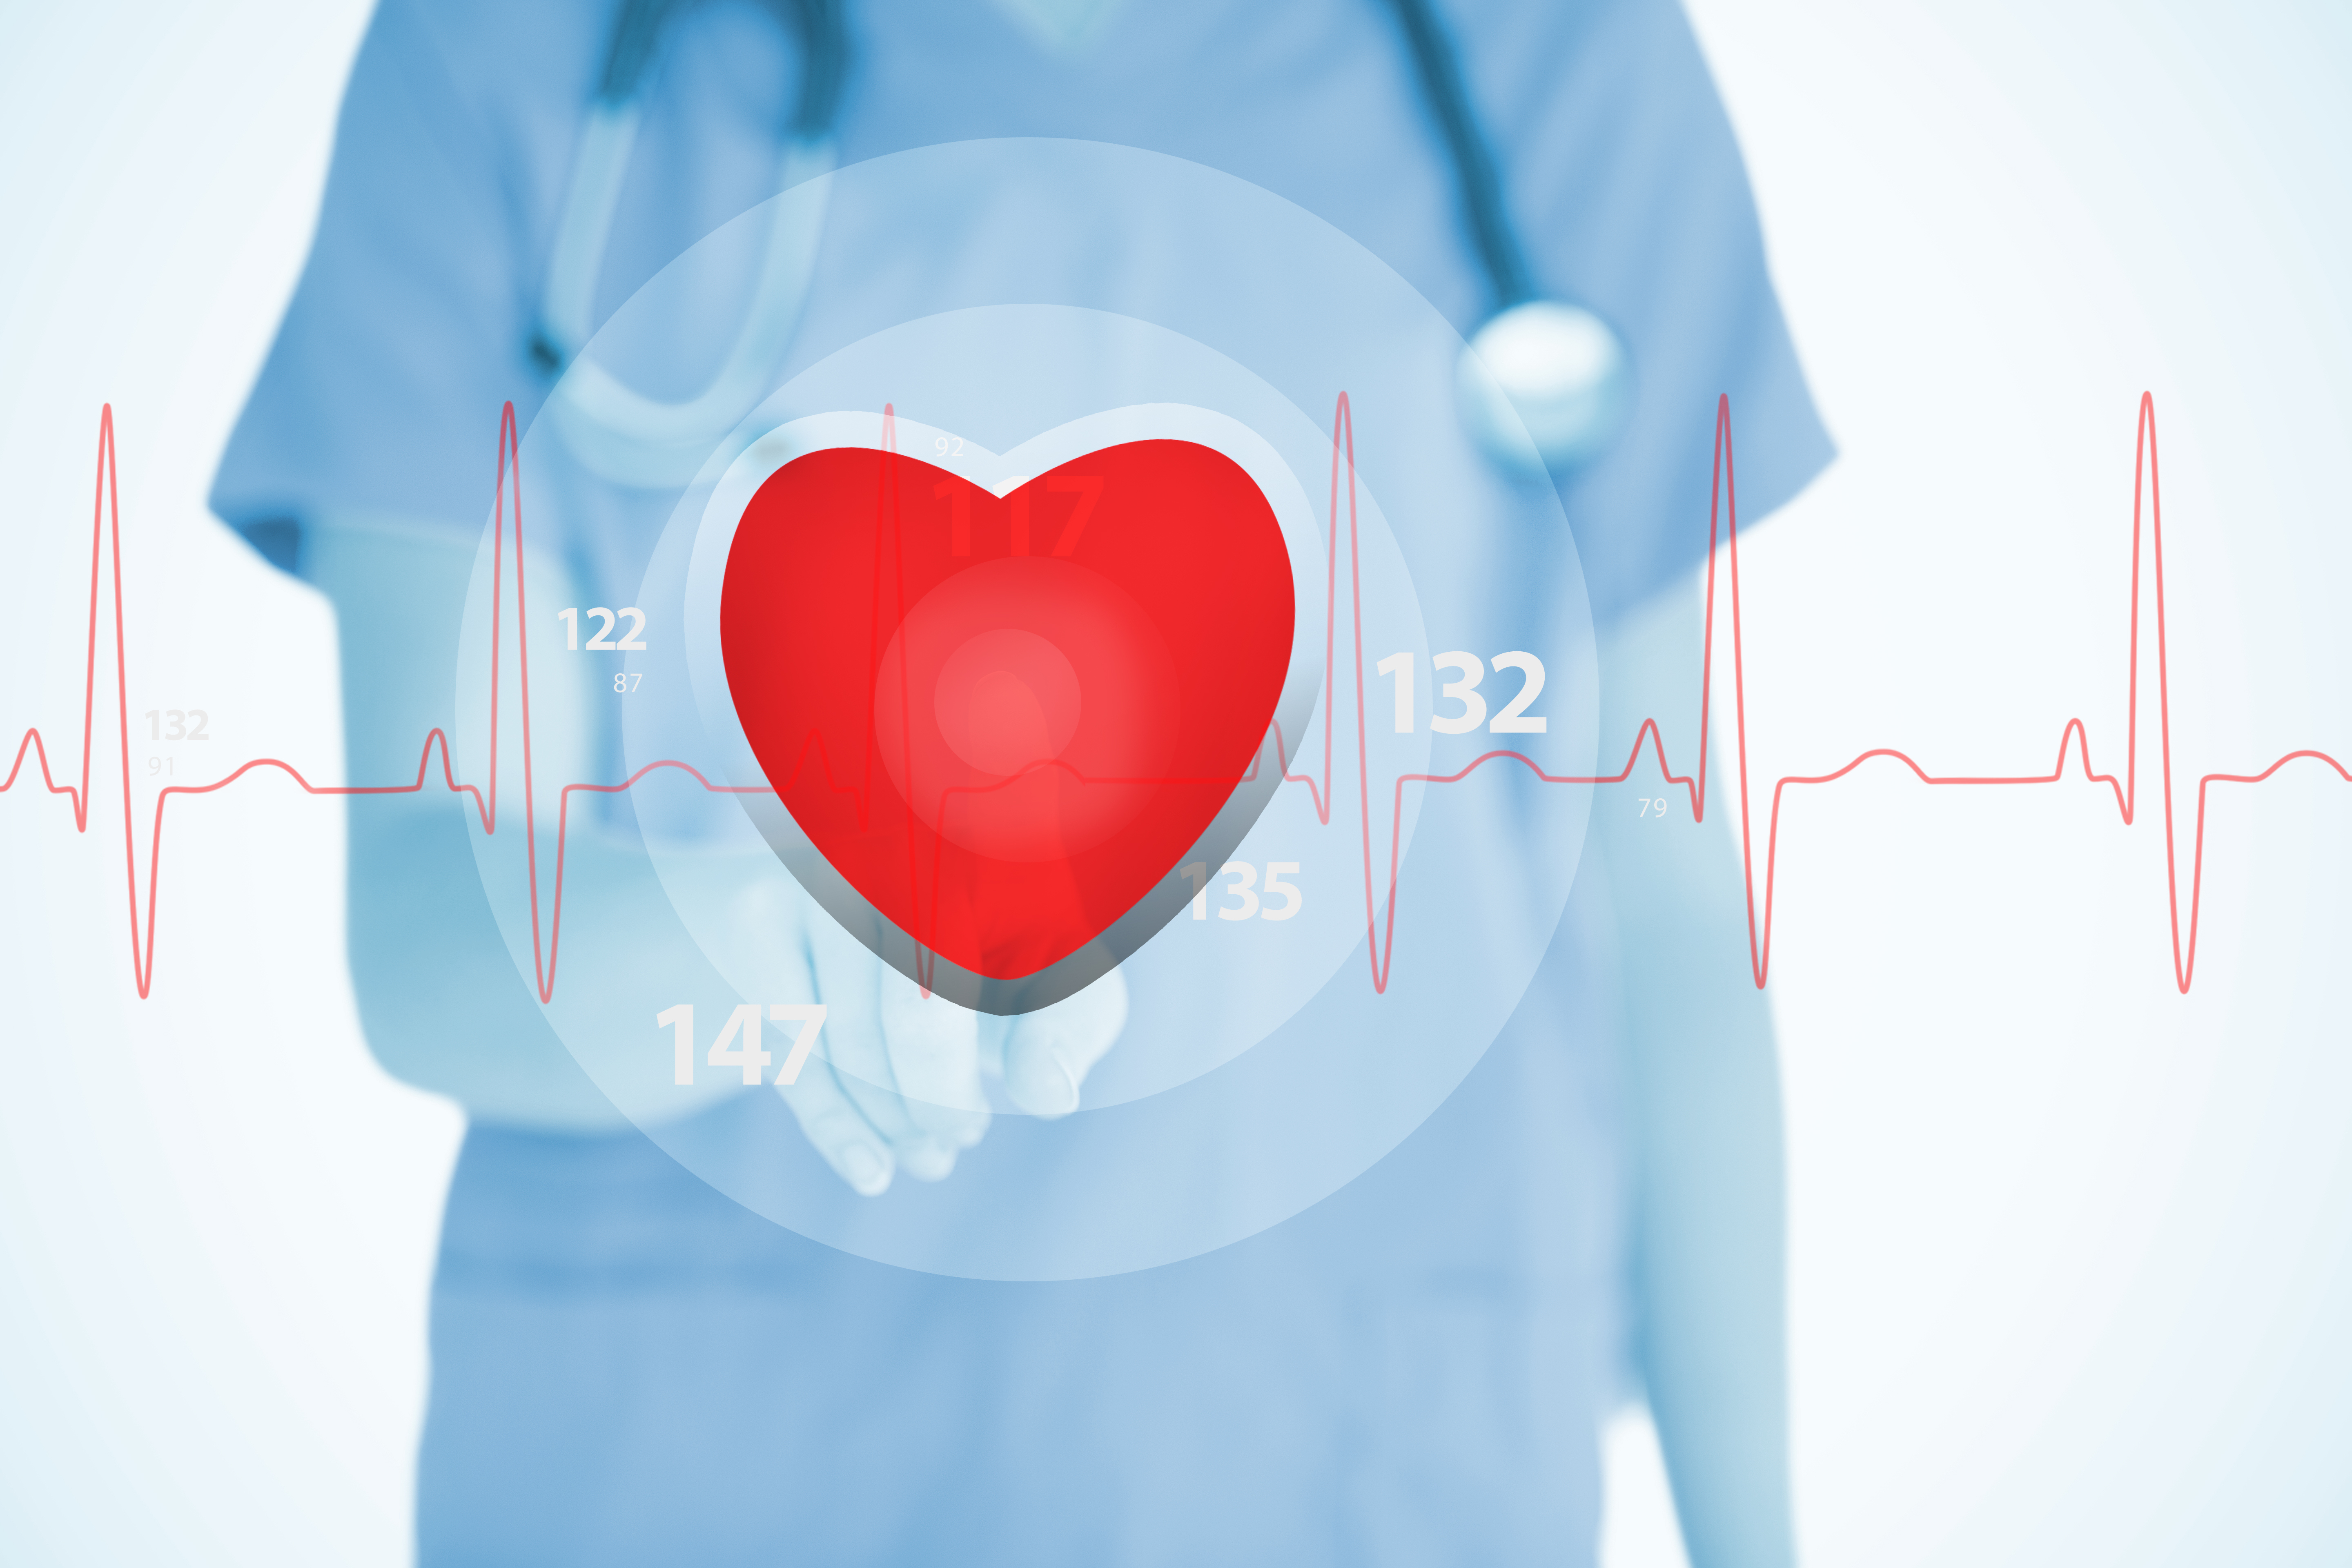 Have a Heart: Working as a Cardiovascular Nurse